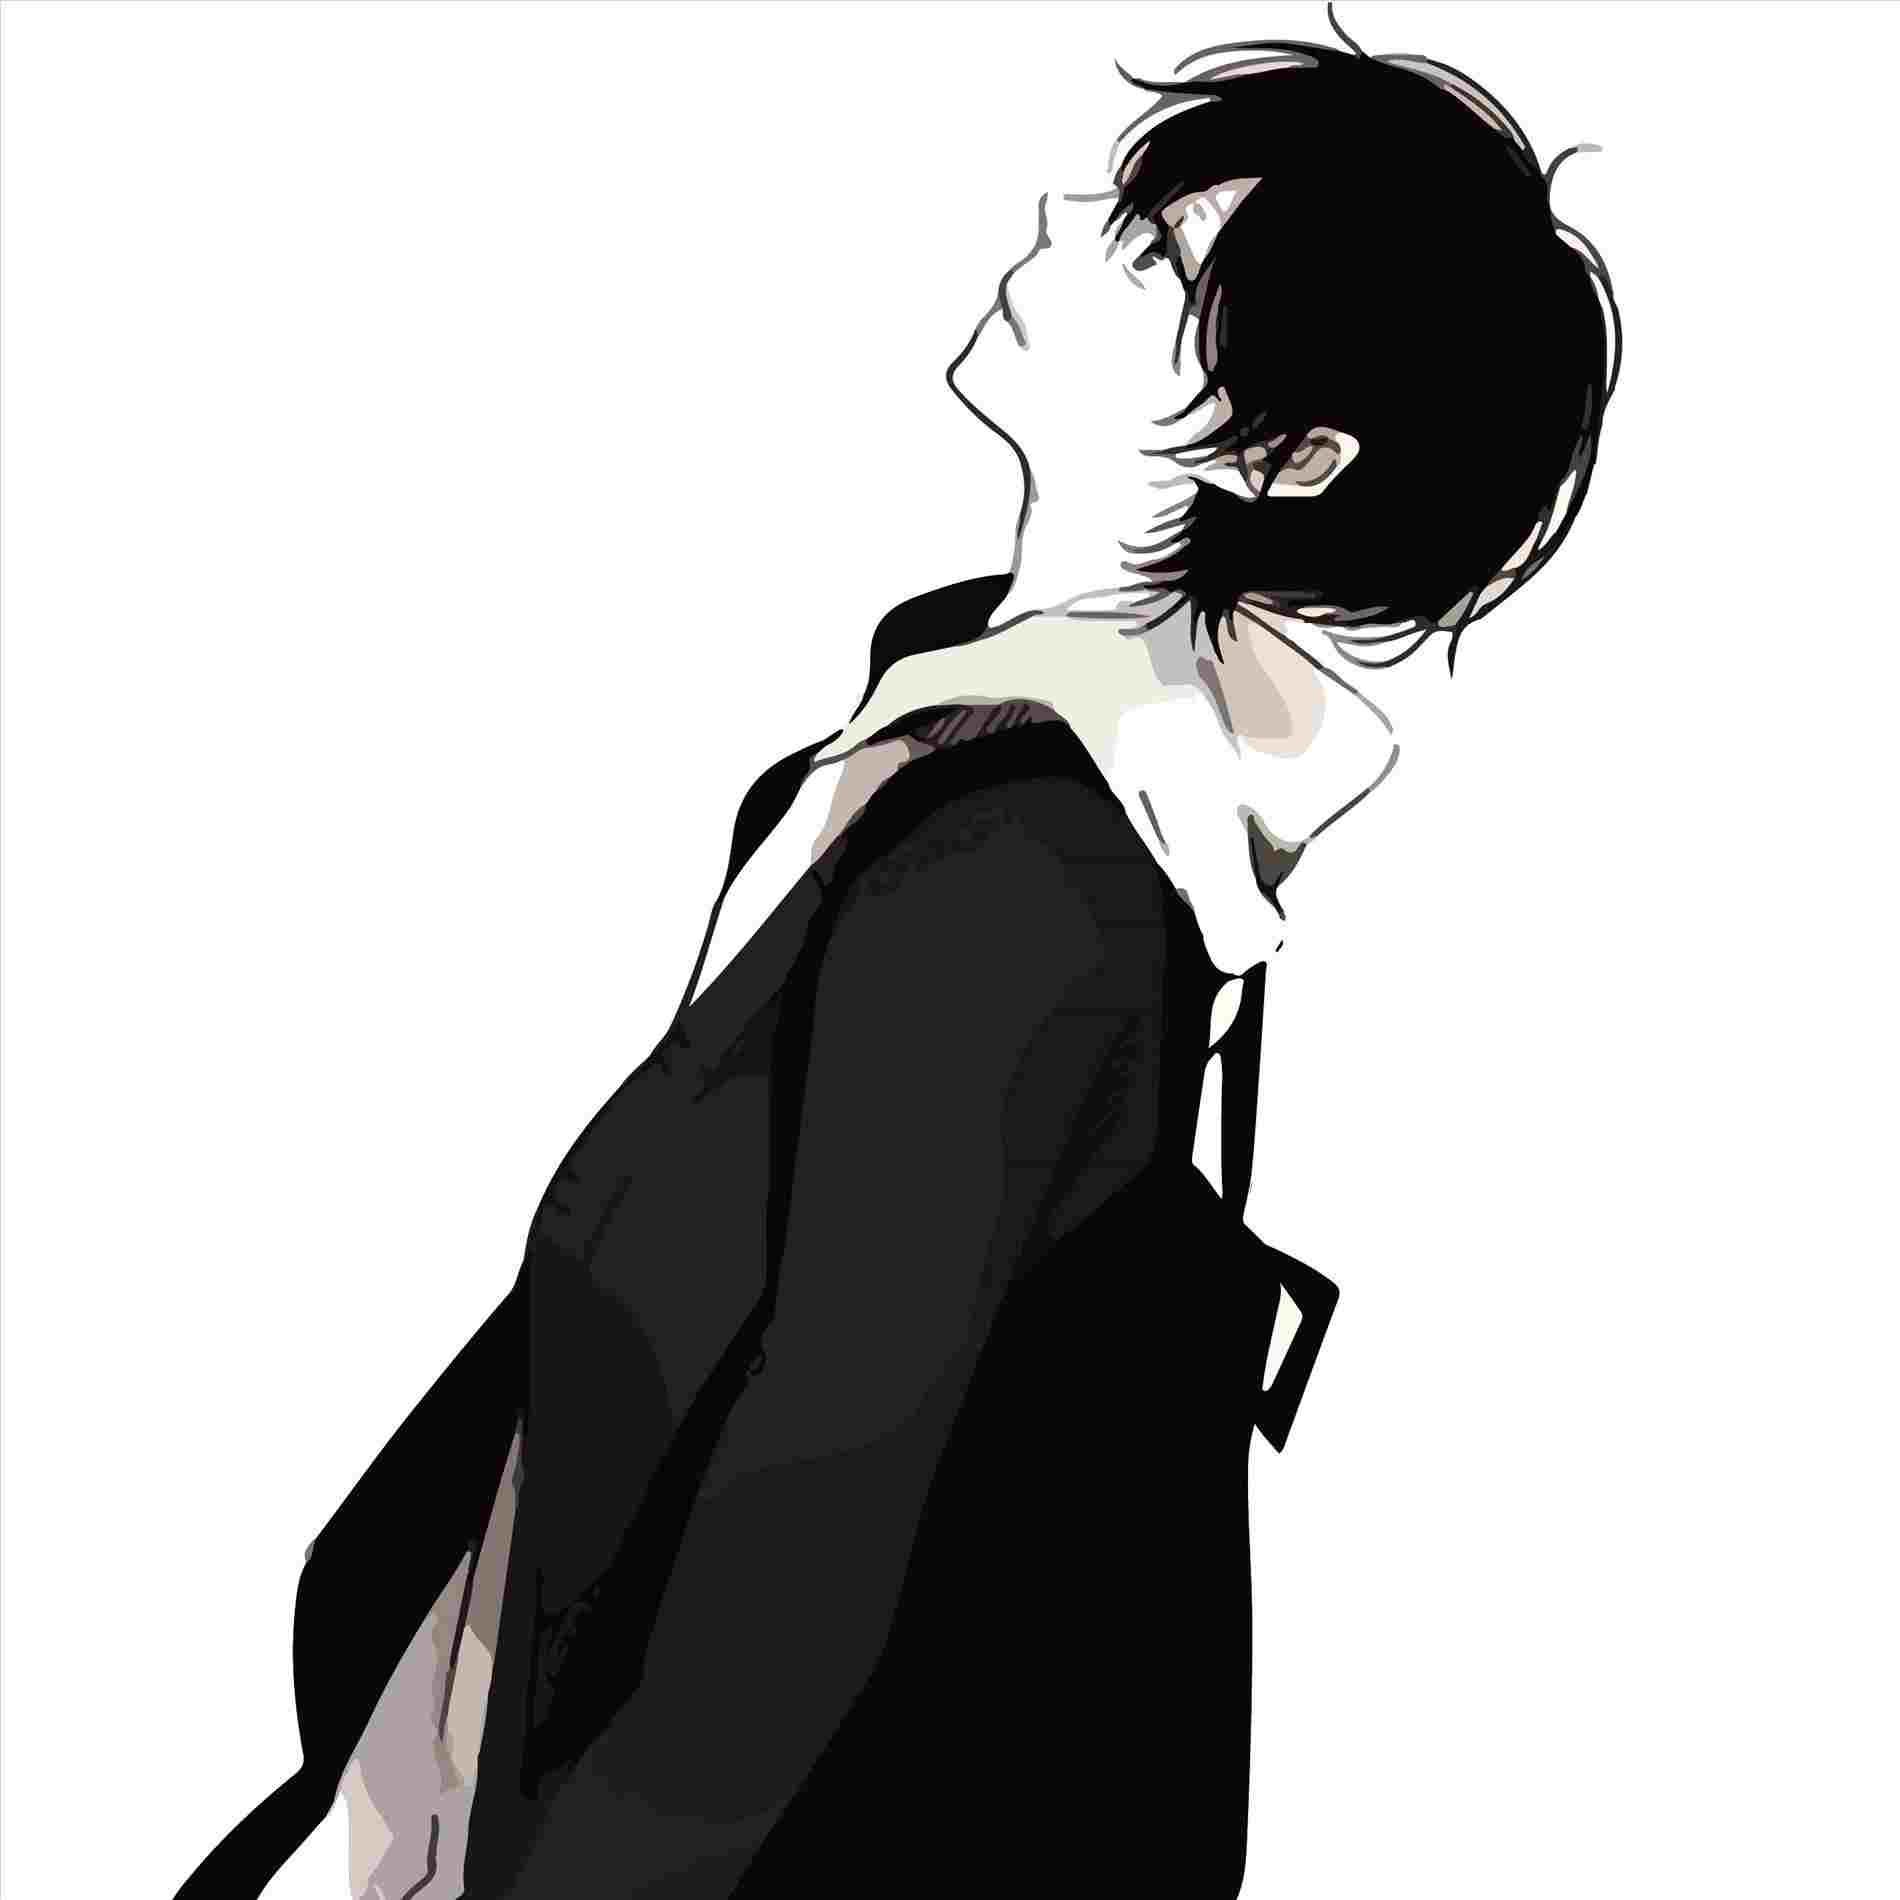 Heartbroken Sad Anime Picture Wallpaper